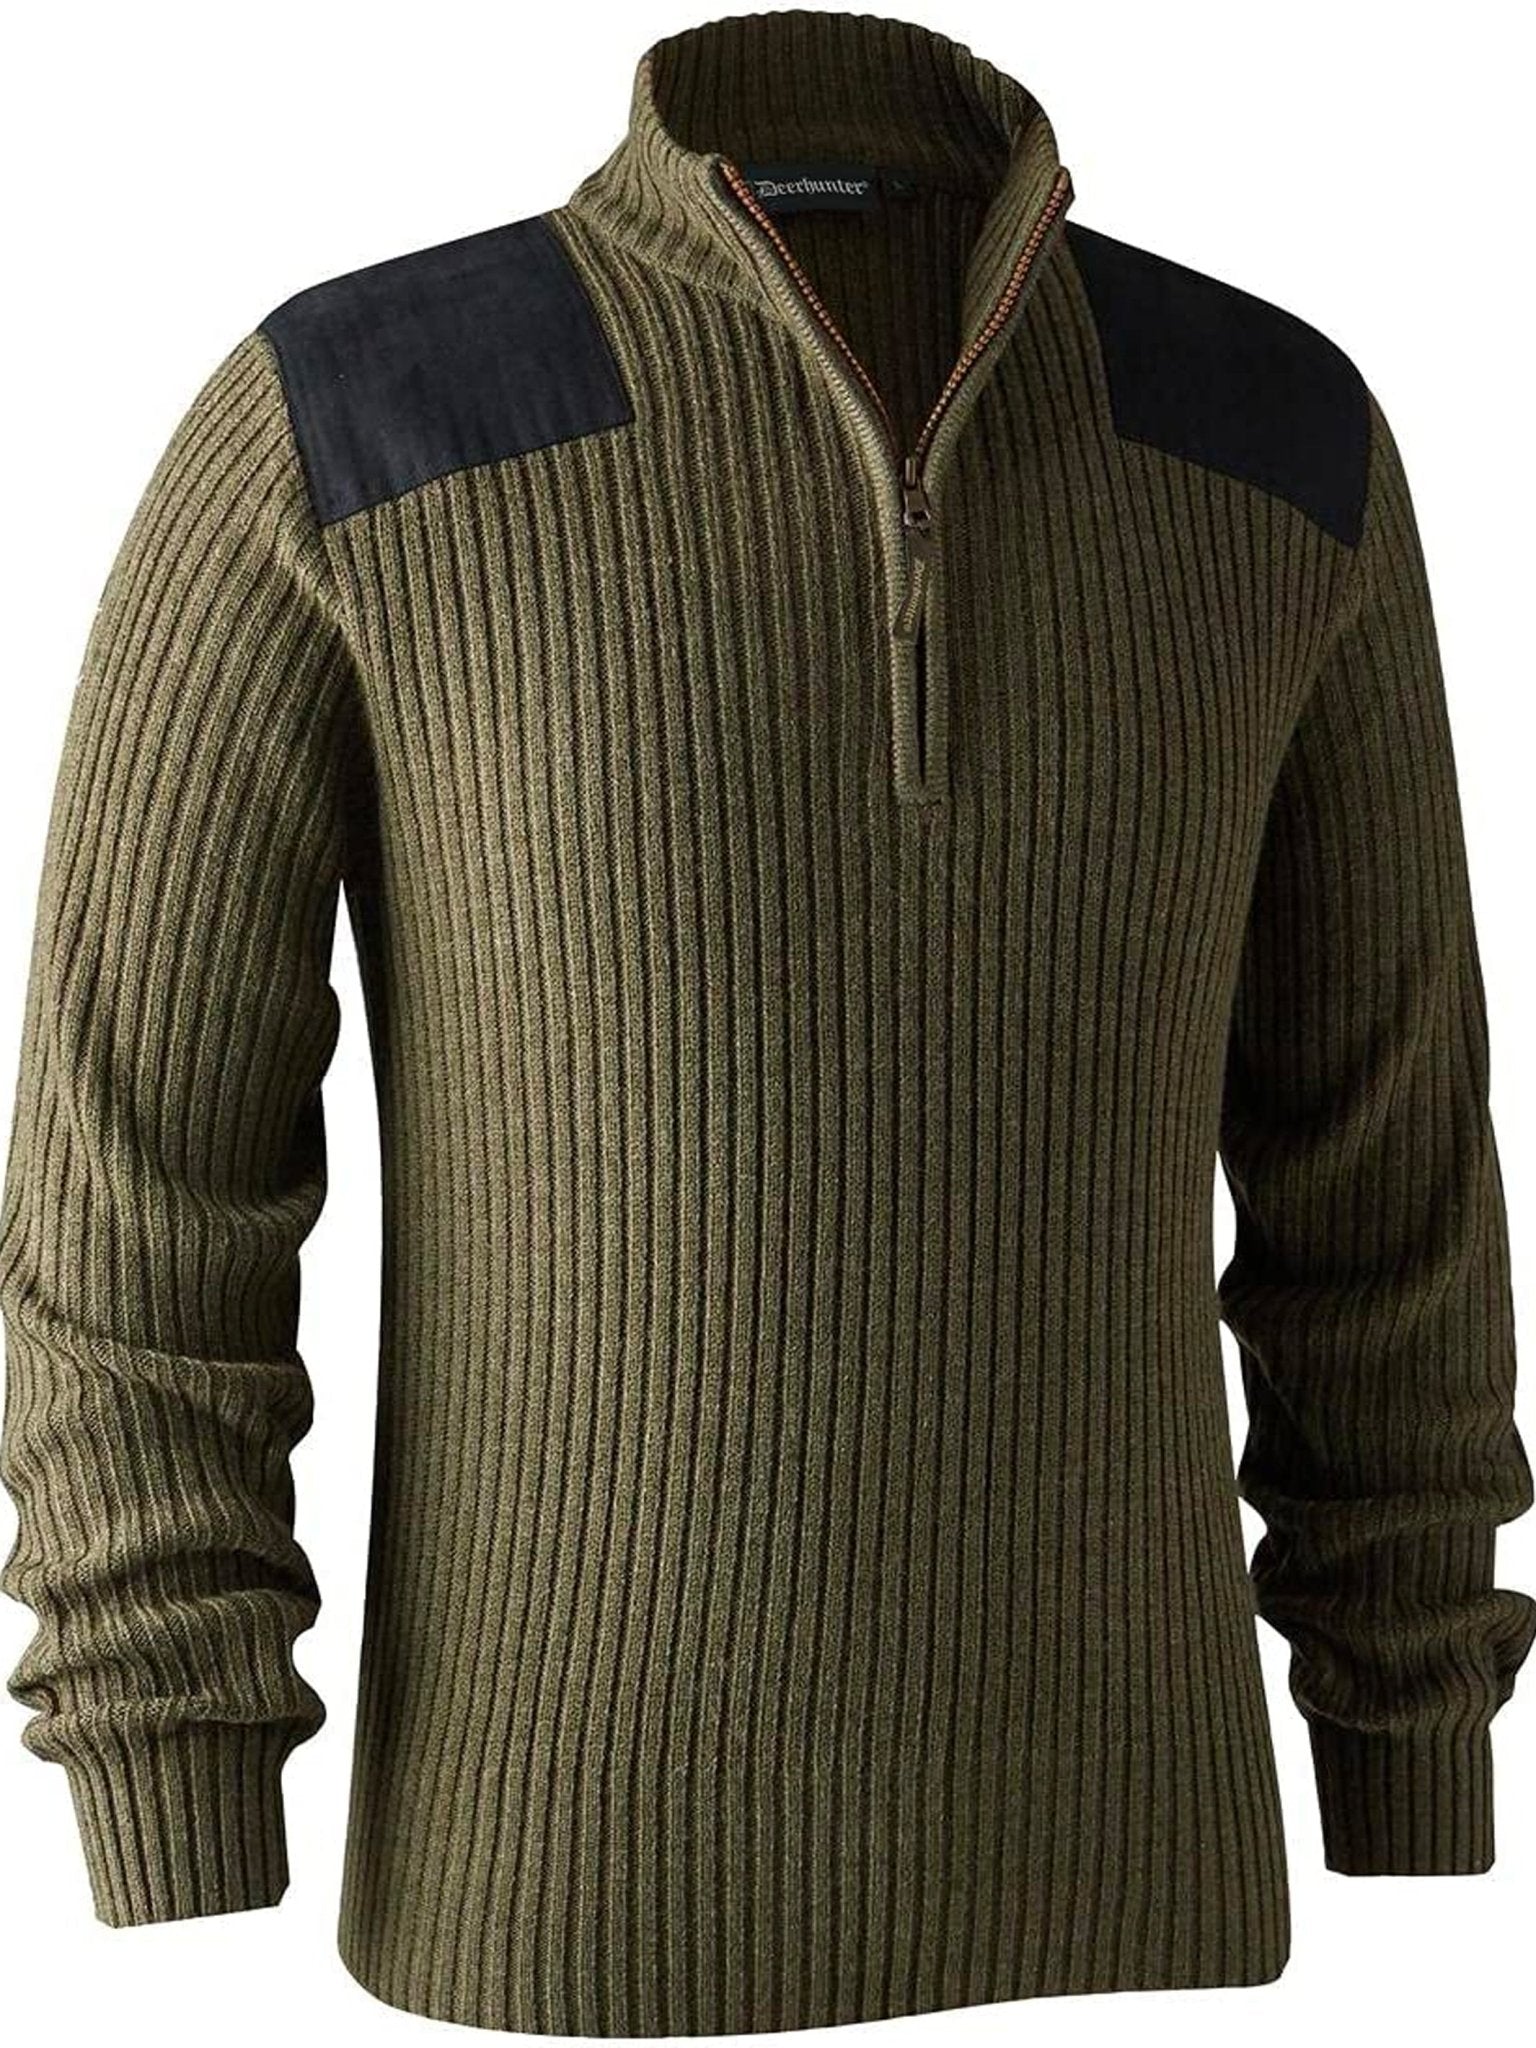 4elementsclothingDeerhunterDeerhunter - Rogaland knit pullover / jumper with quarter ZipKnitwear8726-354-48